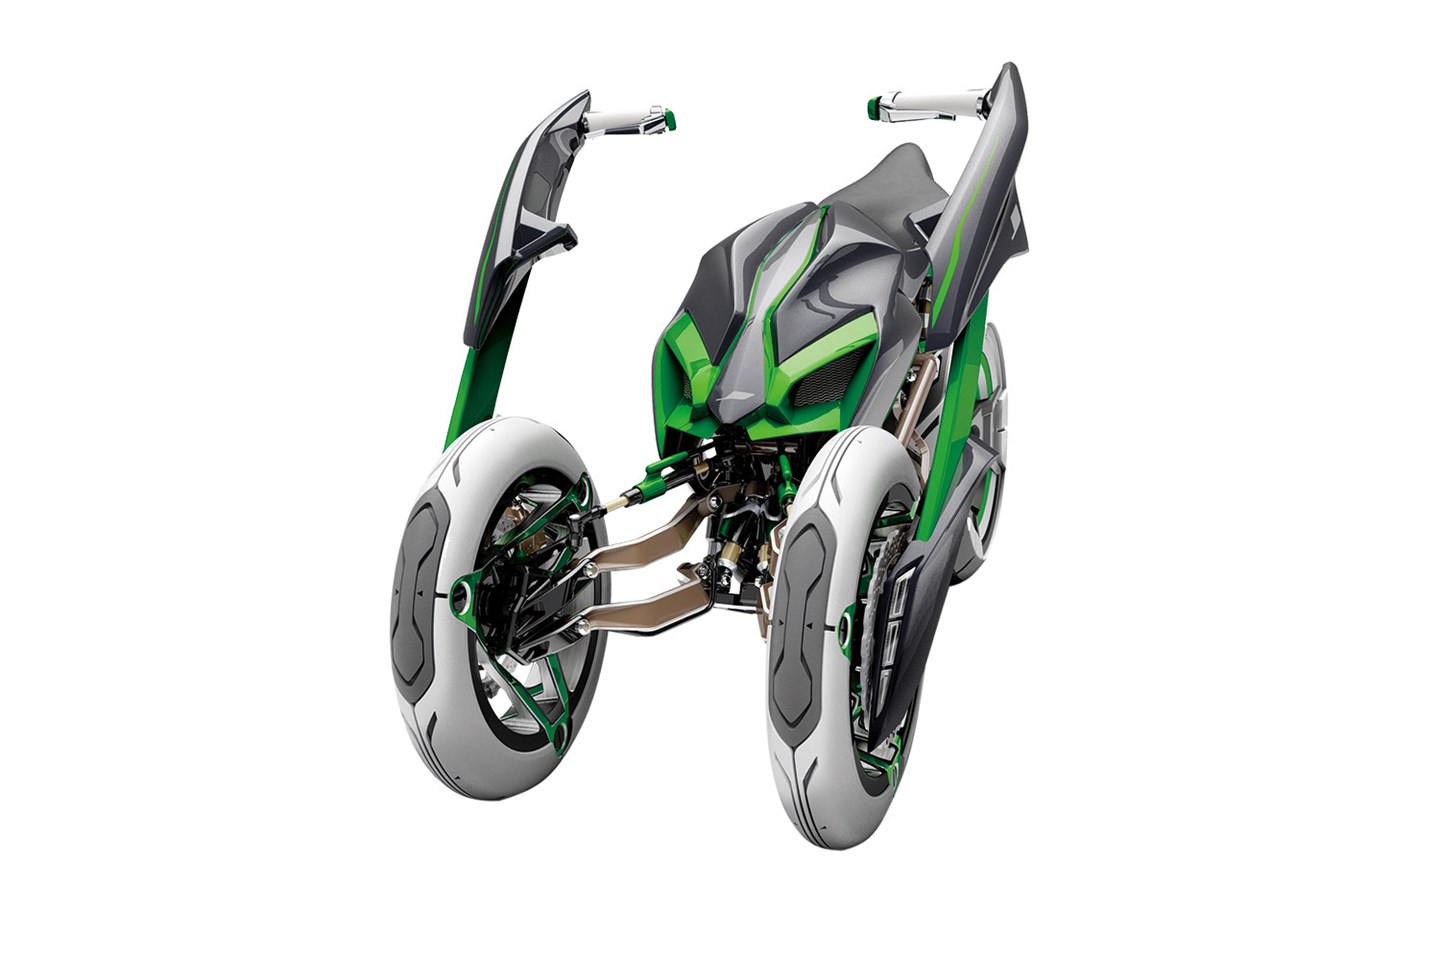 Kawasaki ramp up technology three-wheeled MCN